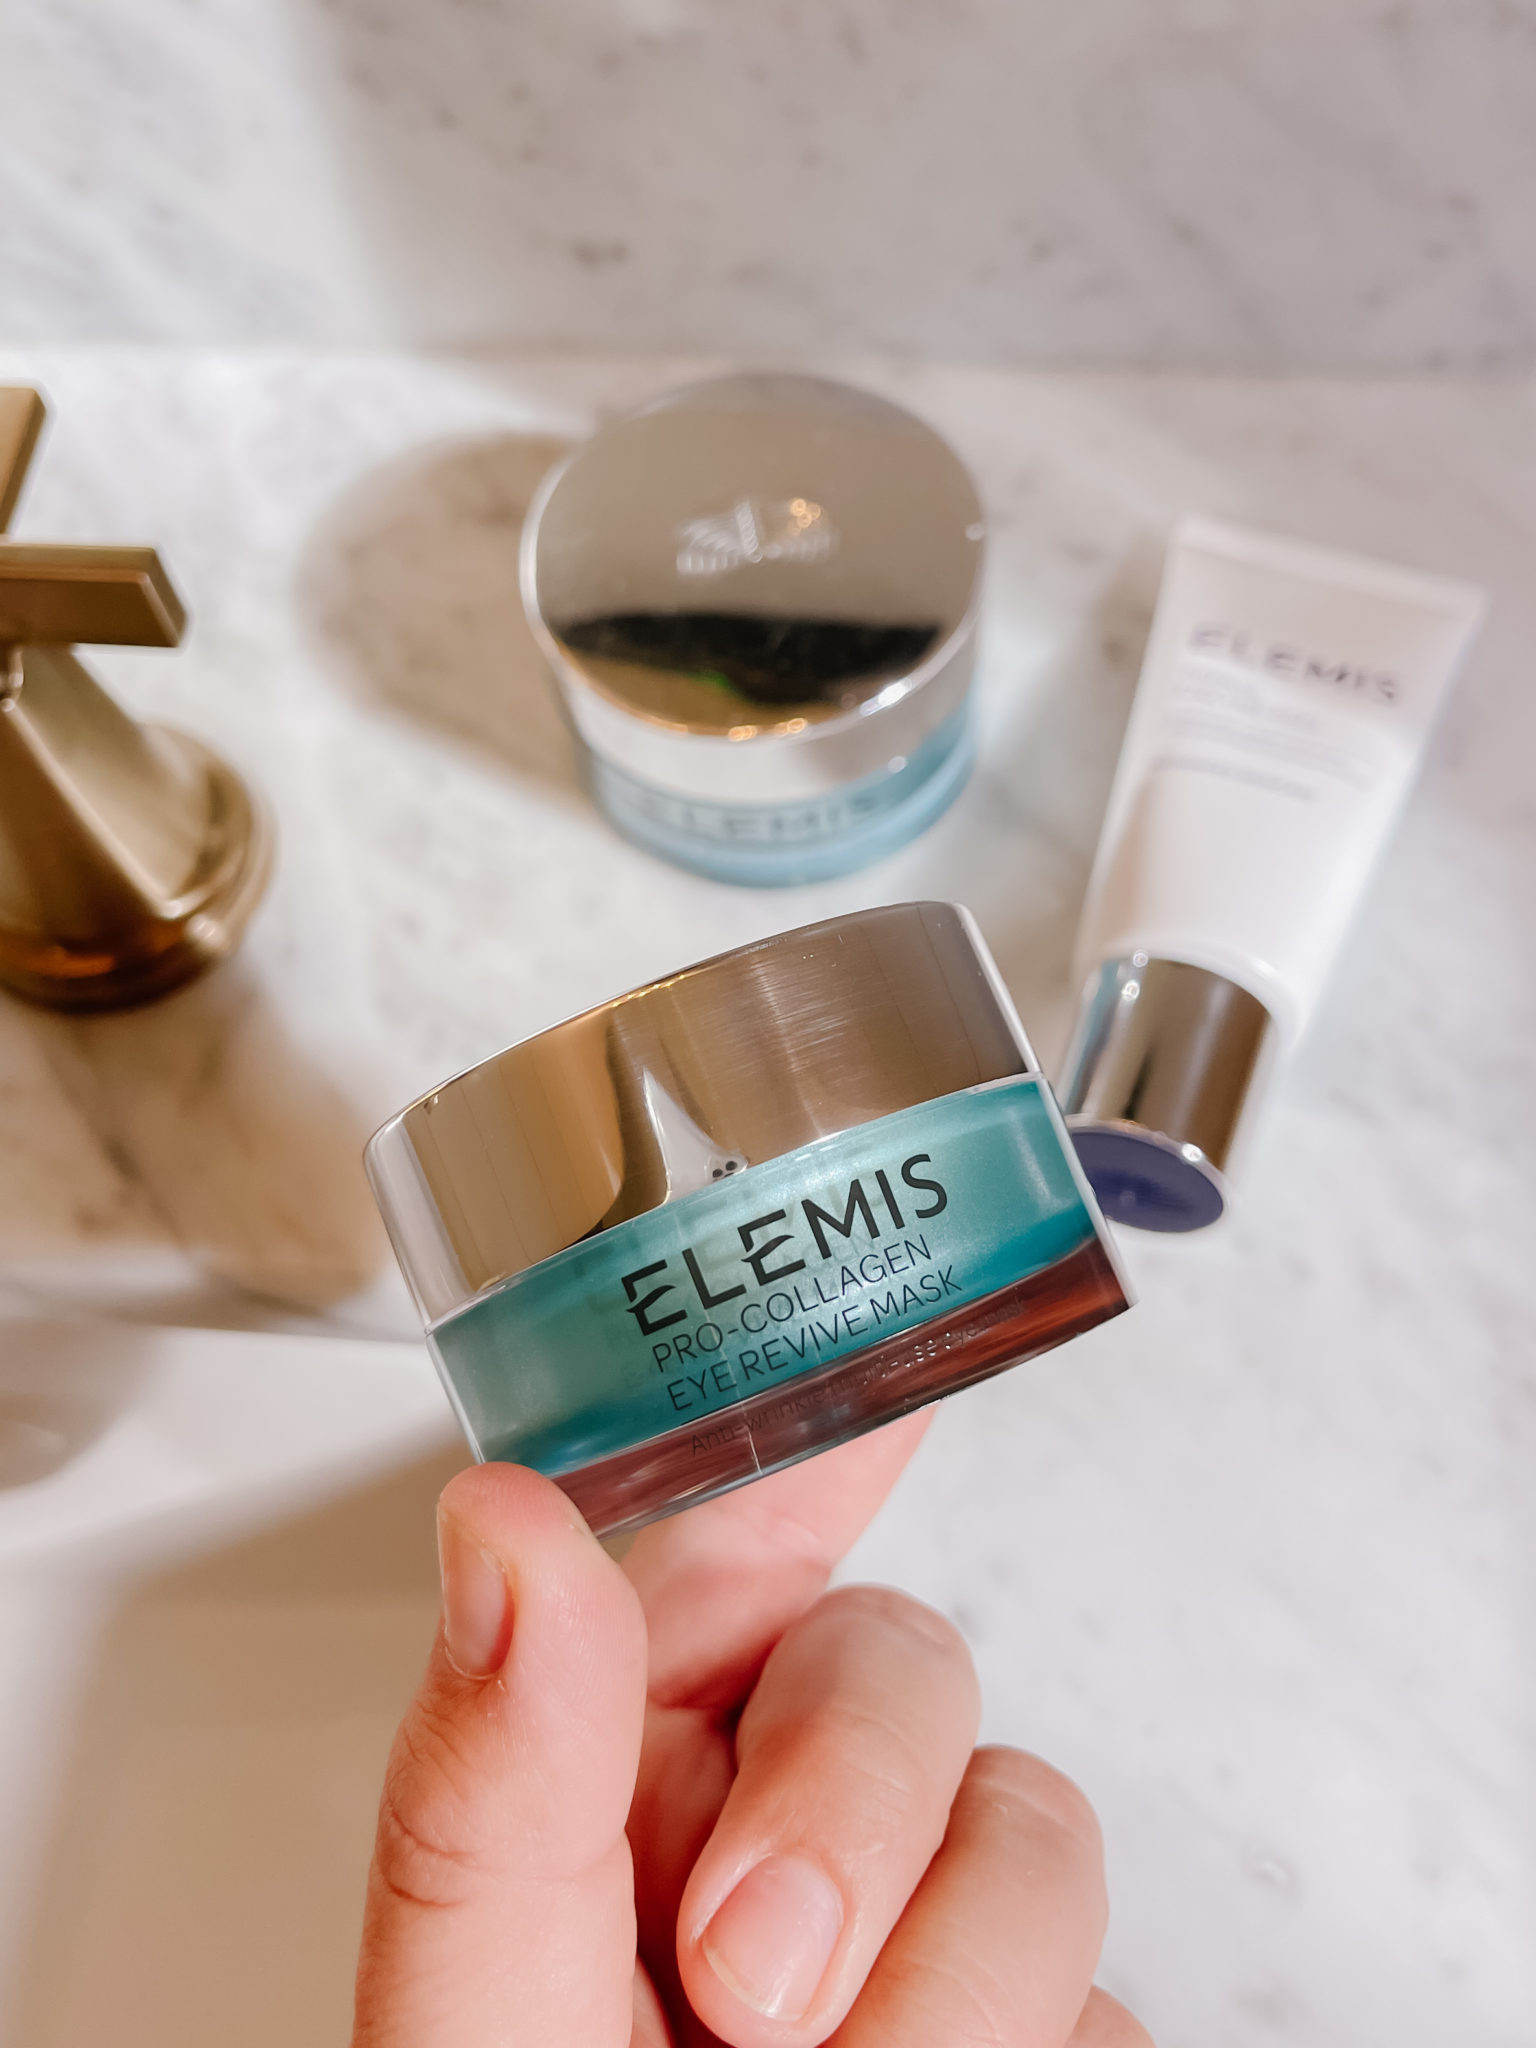 ELEMIS’ Pro Collagen Eye Revive Mask